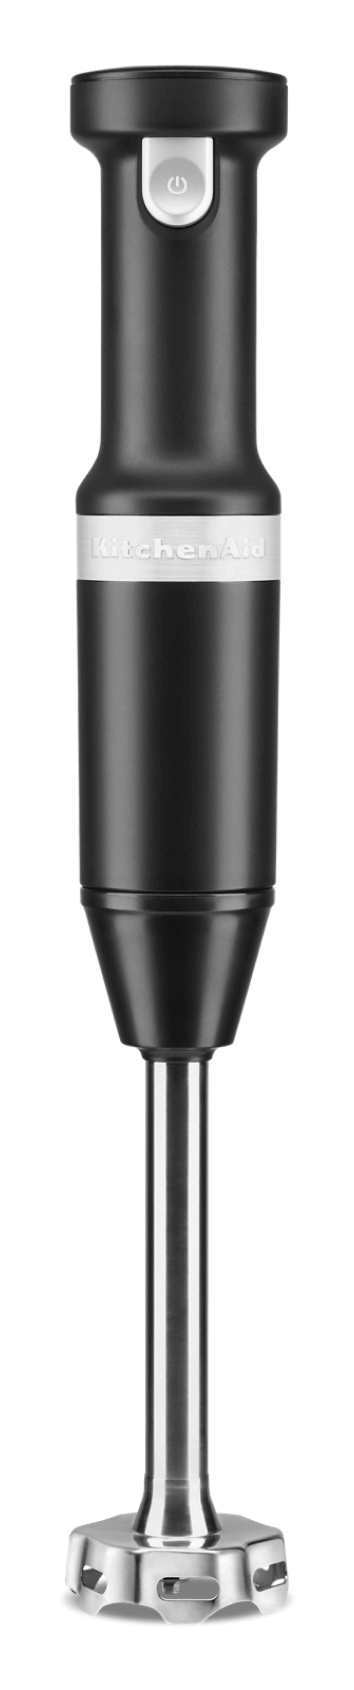 KitchenAid Black Matte Cordless Immersion Blender.